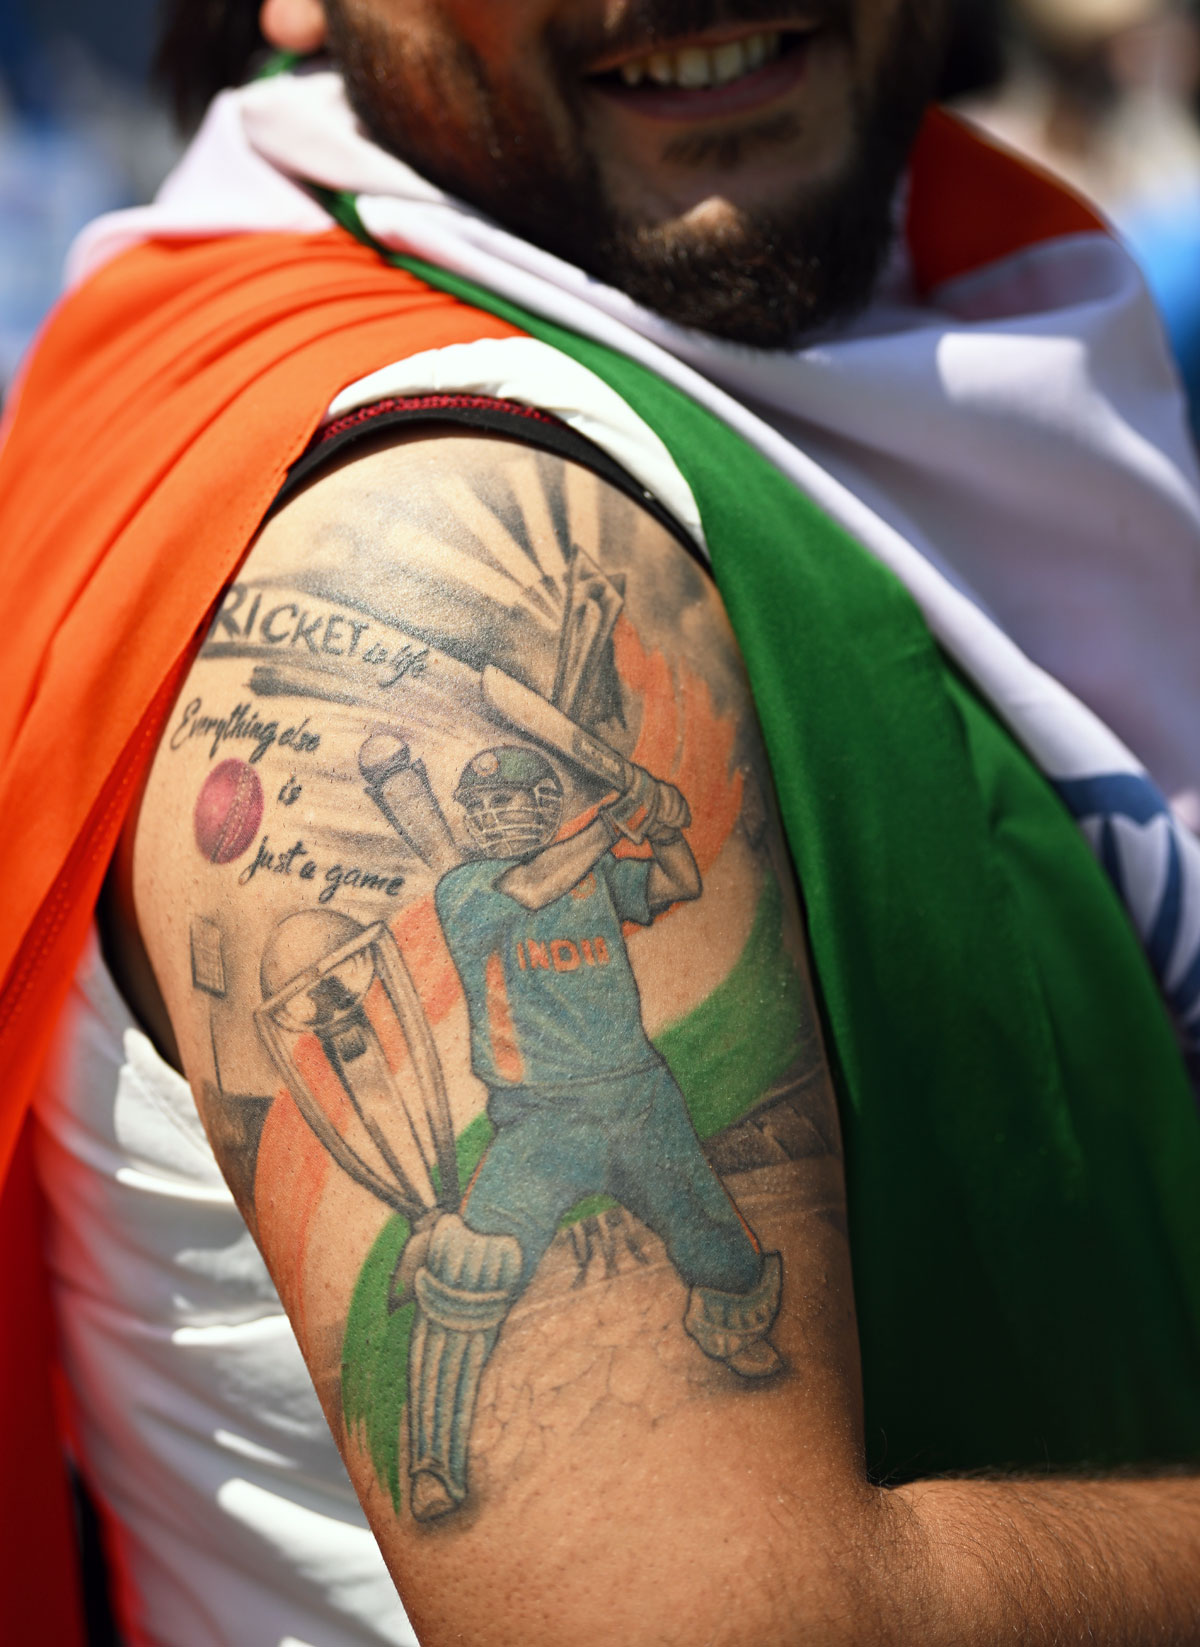 Sakshi Singh Dhoni flaunts her 'Mahi' tattoo during IPL 8 final | Ipl News  - The Indian Express